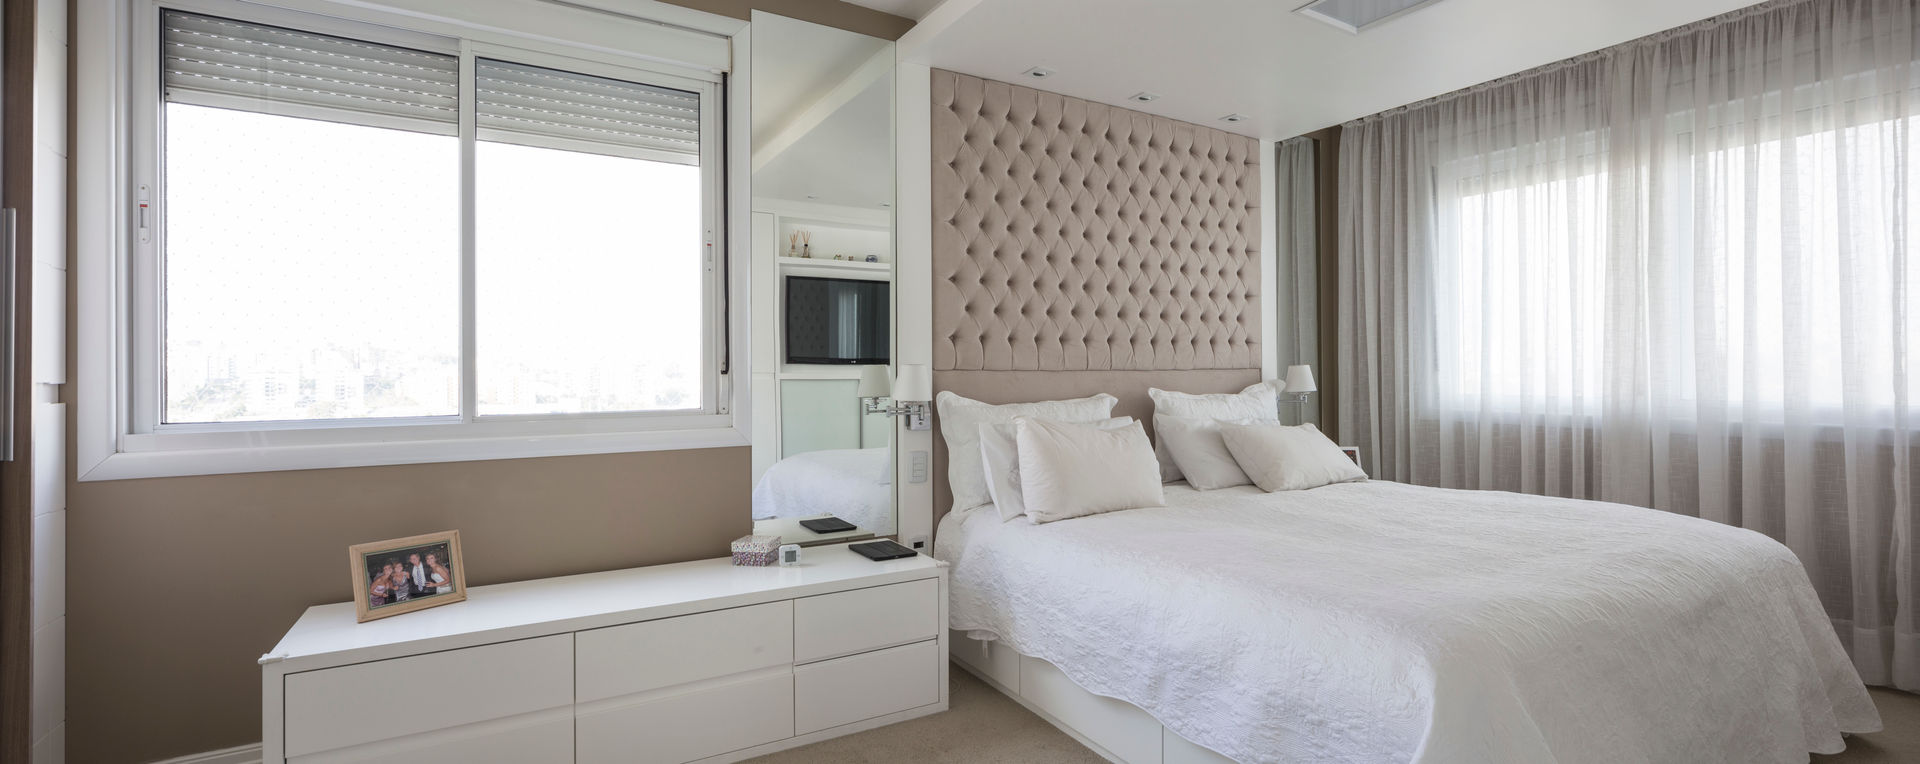 NRT | Dormitório Casal, Kali Arquitetura Kali Arquitetura Modern style bedroom